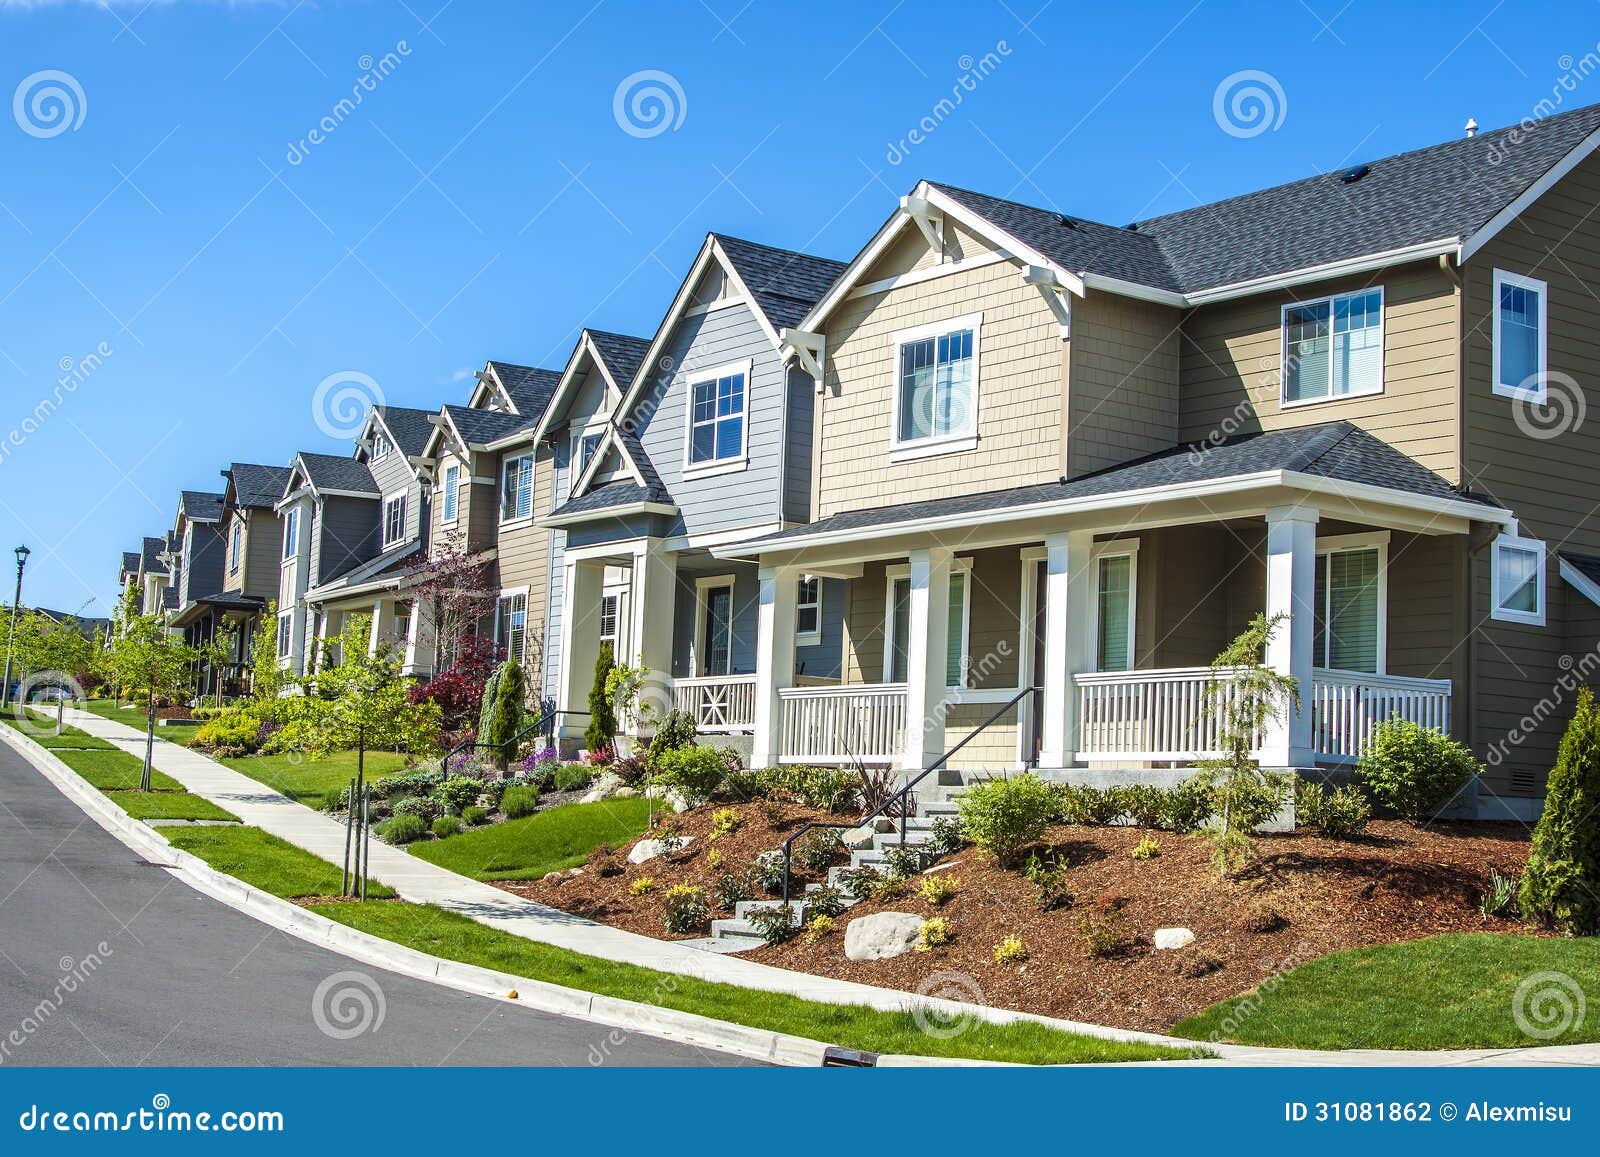 suburban houses